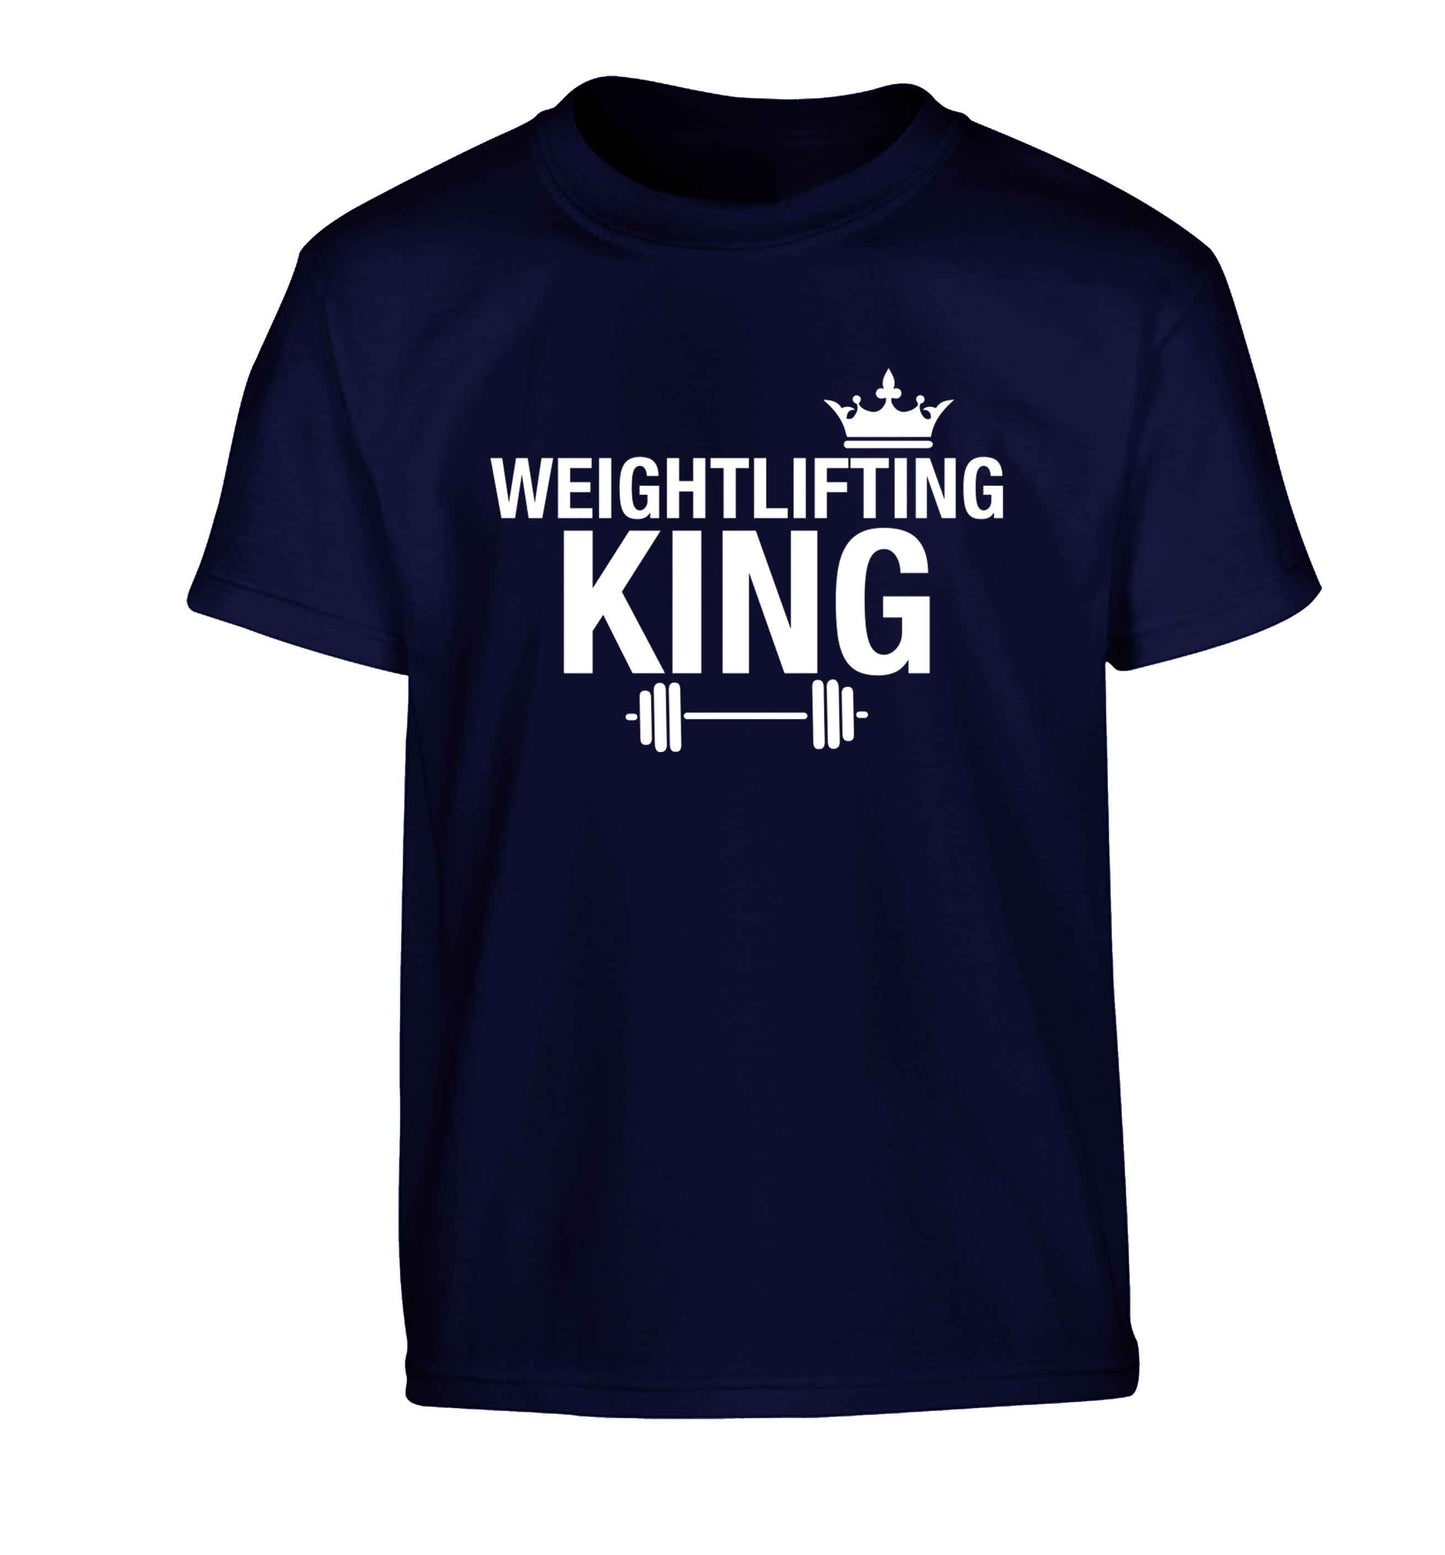 Weightlifting king Children's navy Tshirt 12-13 Years